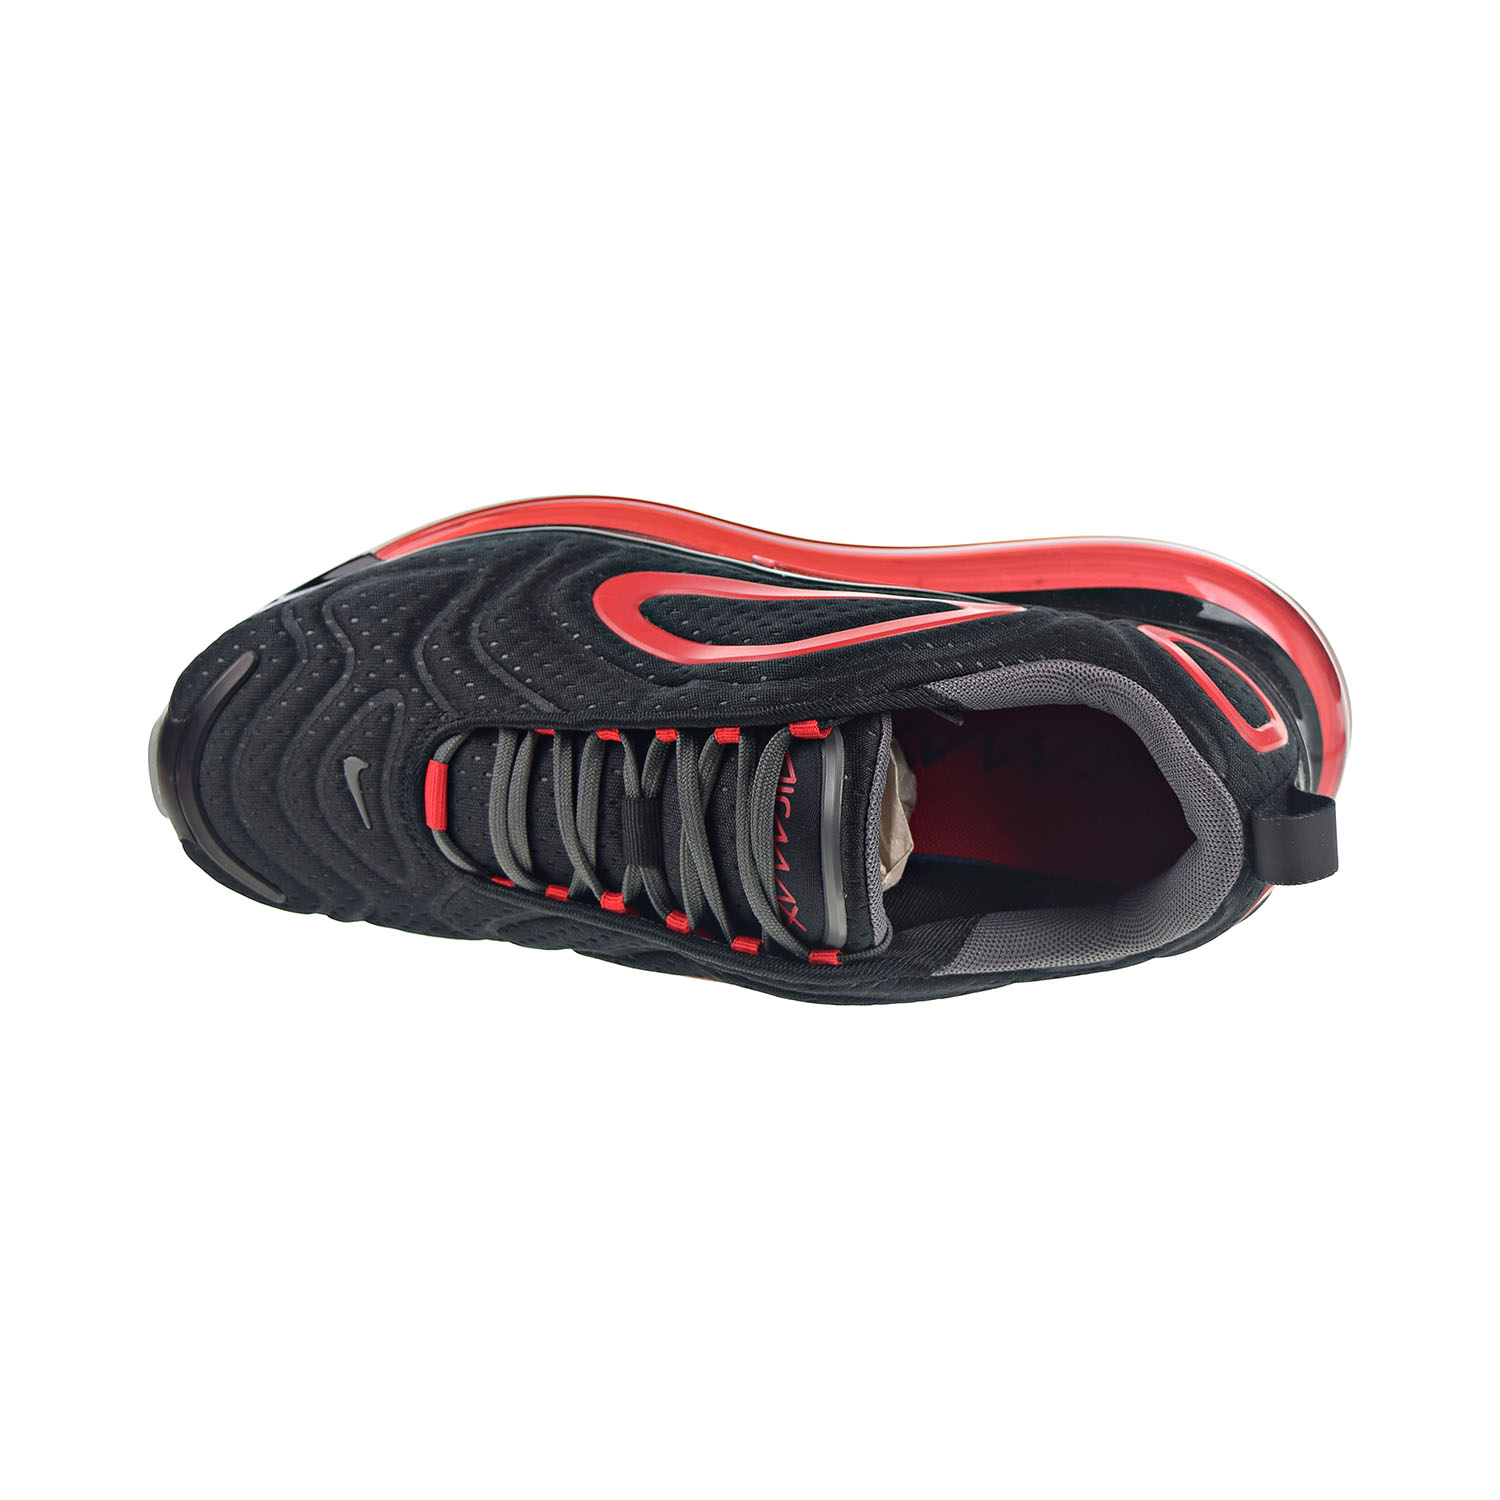 Nike Air Max 720-Mesh Men's Shoes Black-University Red cn9833-001 - image 5 of 6